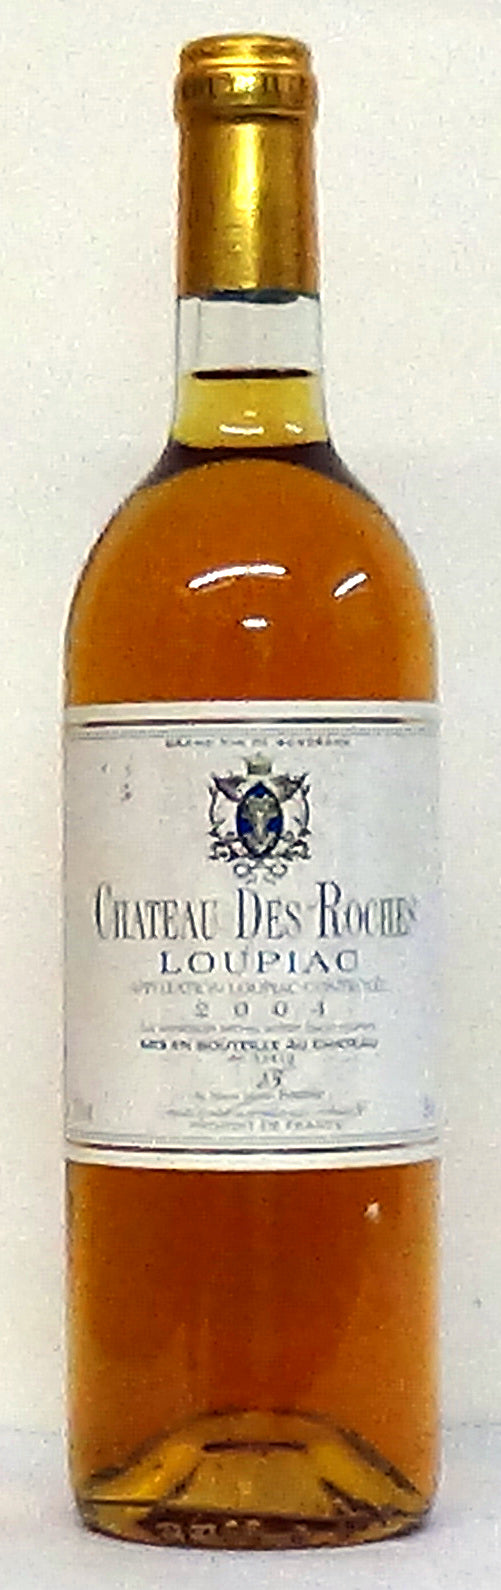 2004 Chateau Des Roches Loupiac